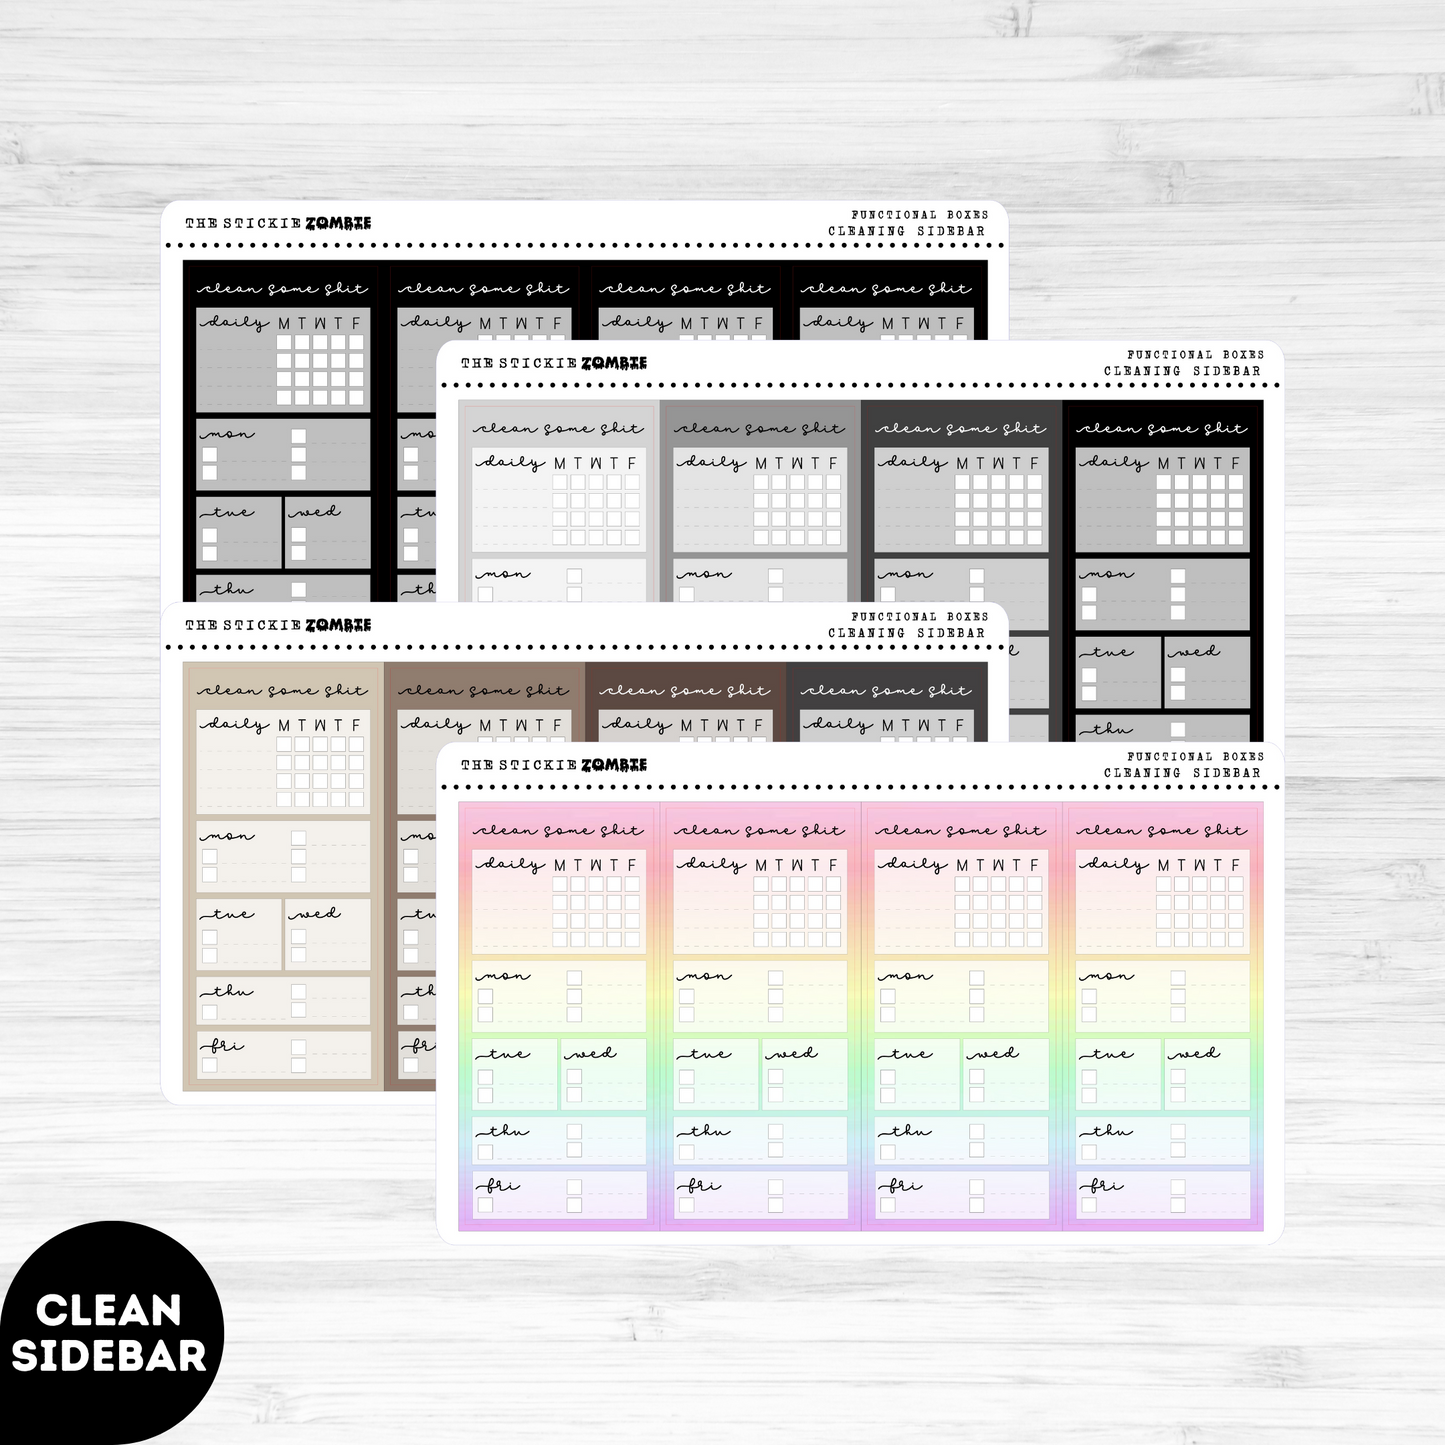 Checklist / Cleaning Sidebar